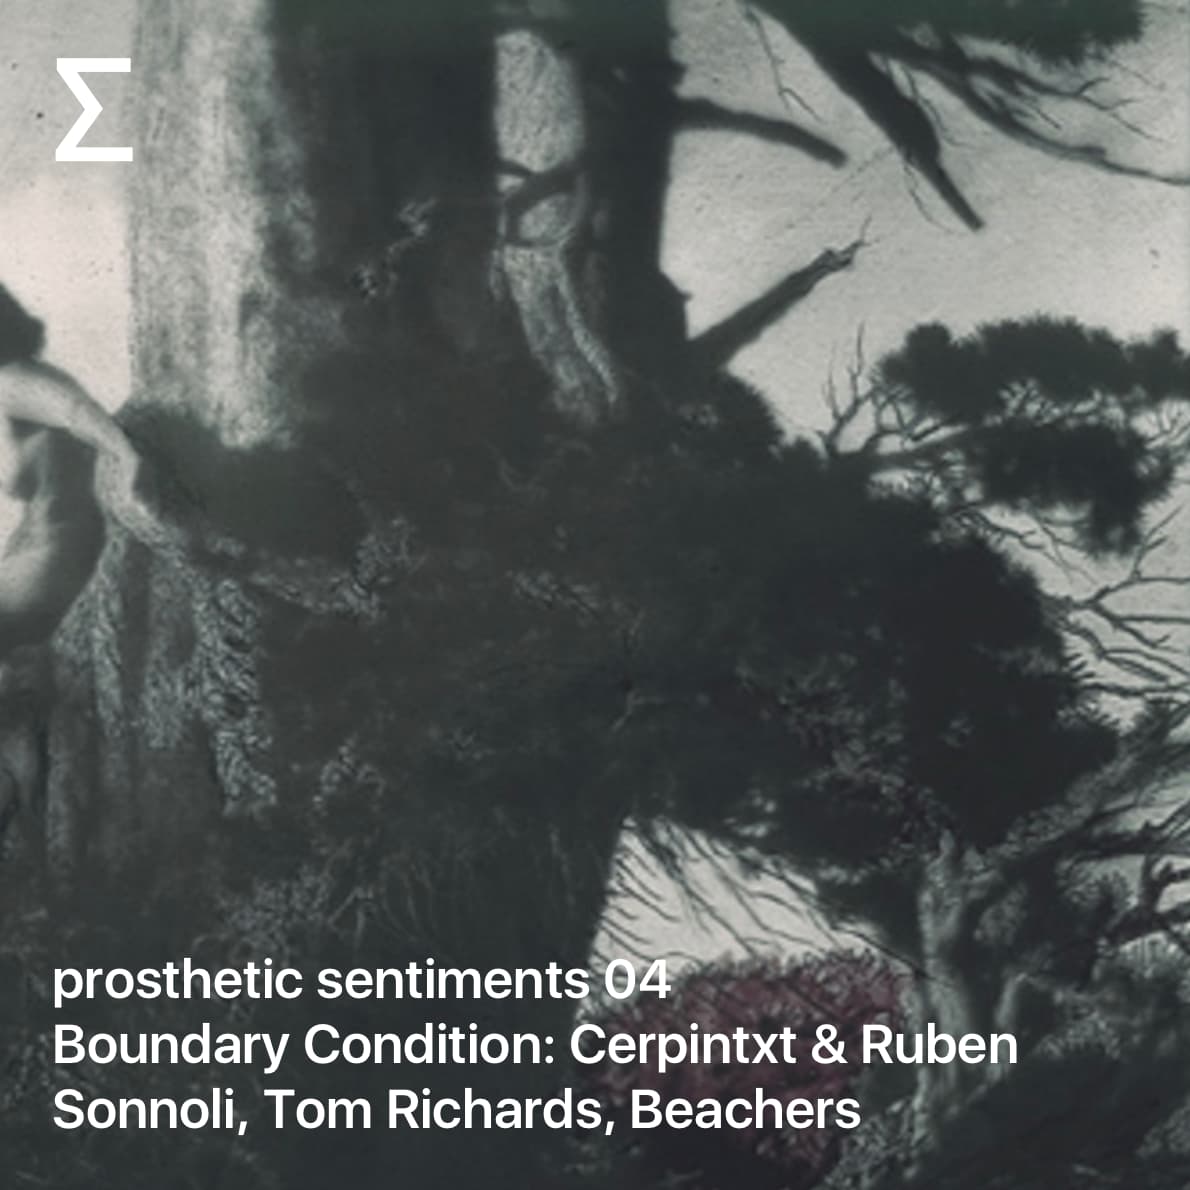 prosthetic sentiments 04 – Boundary Condition: Cerpintxt & Ruben Sonnoli, Tom Richards, Beachers